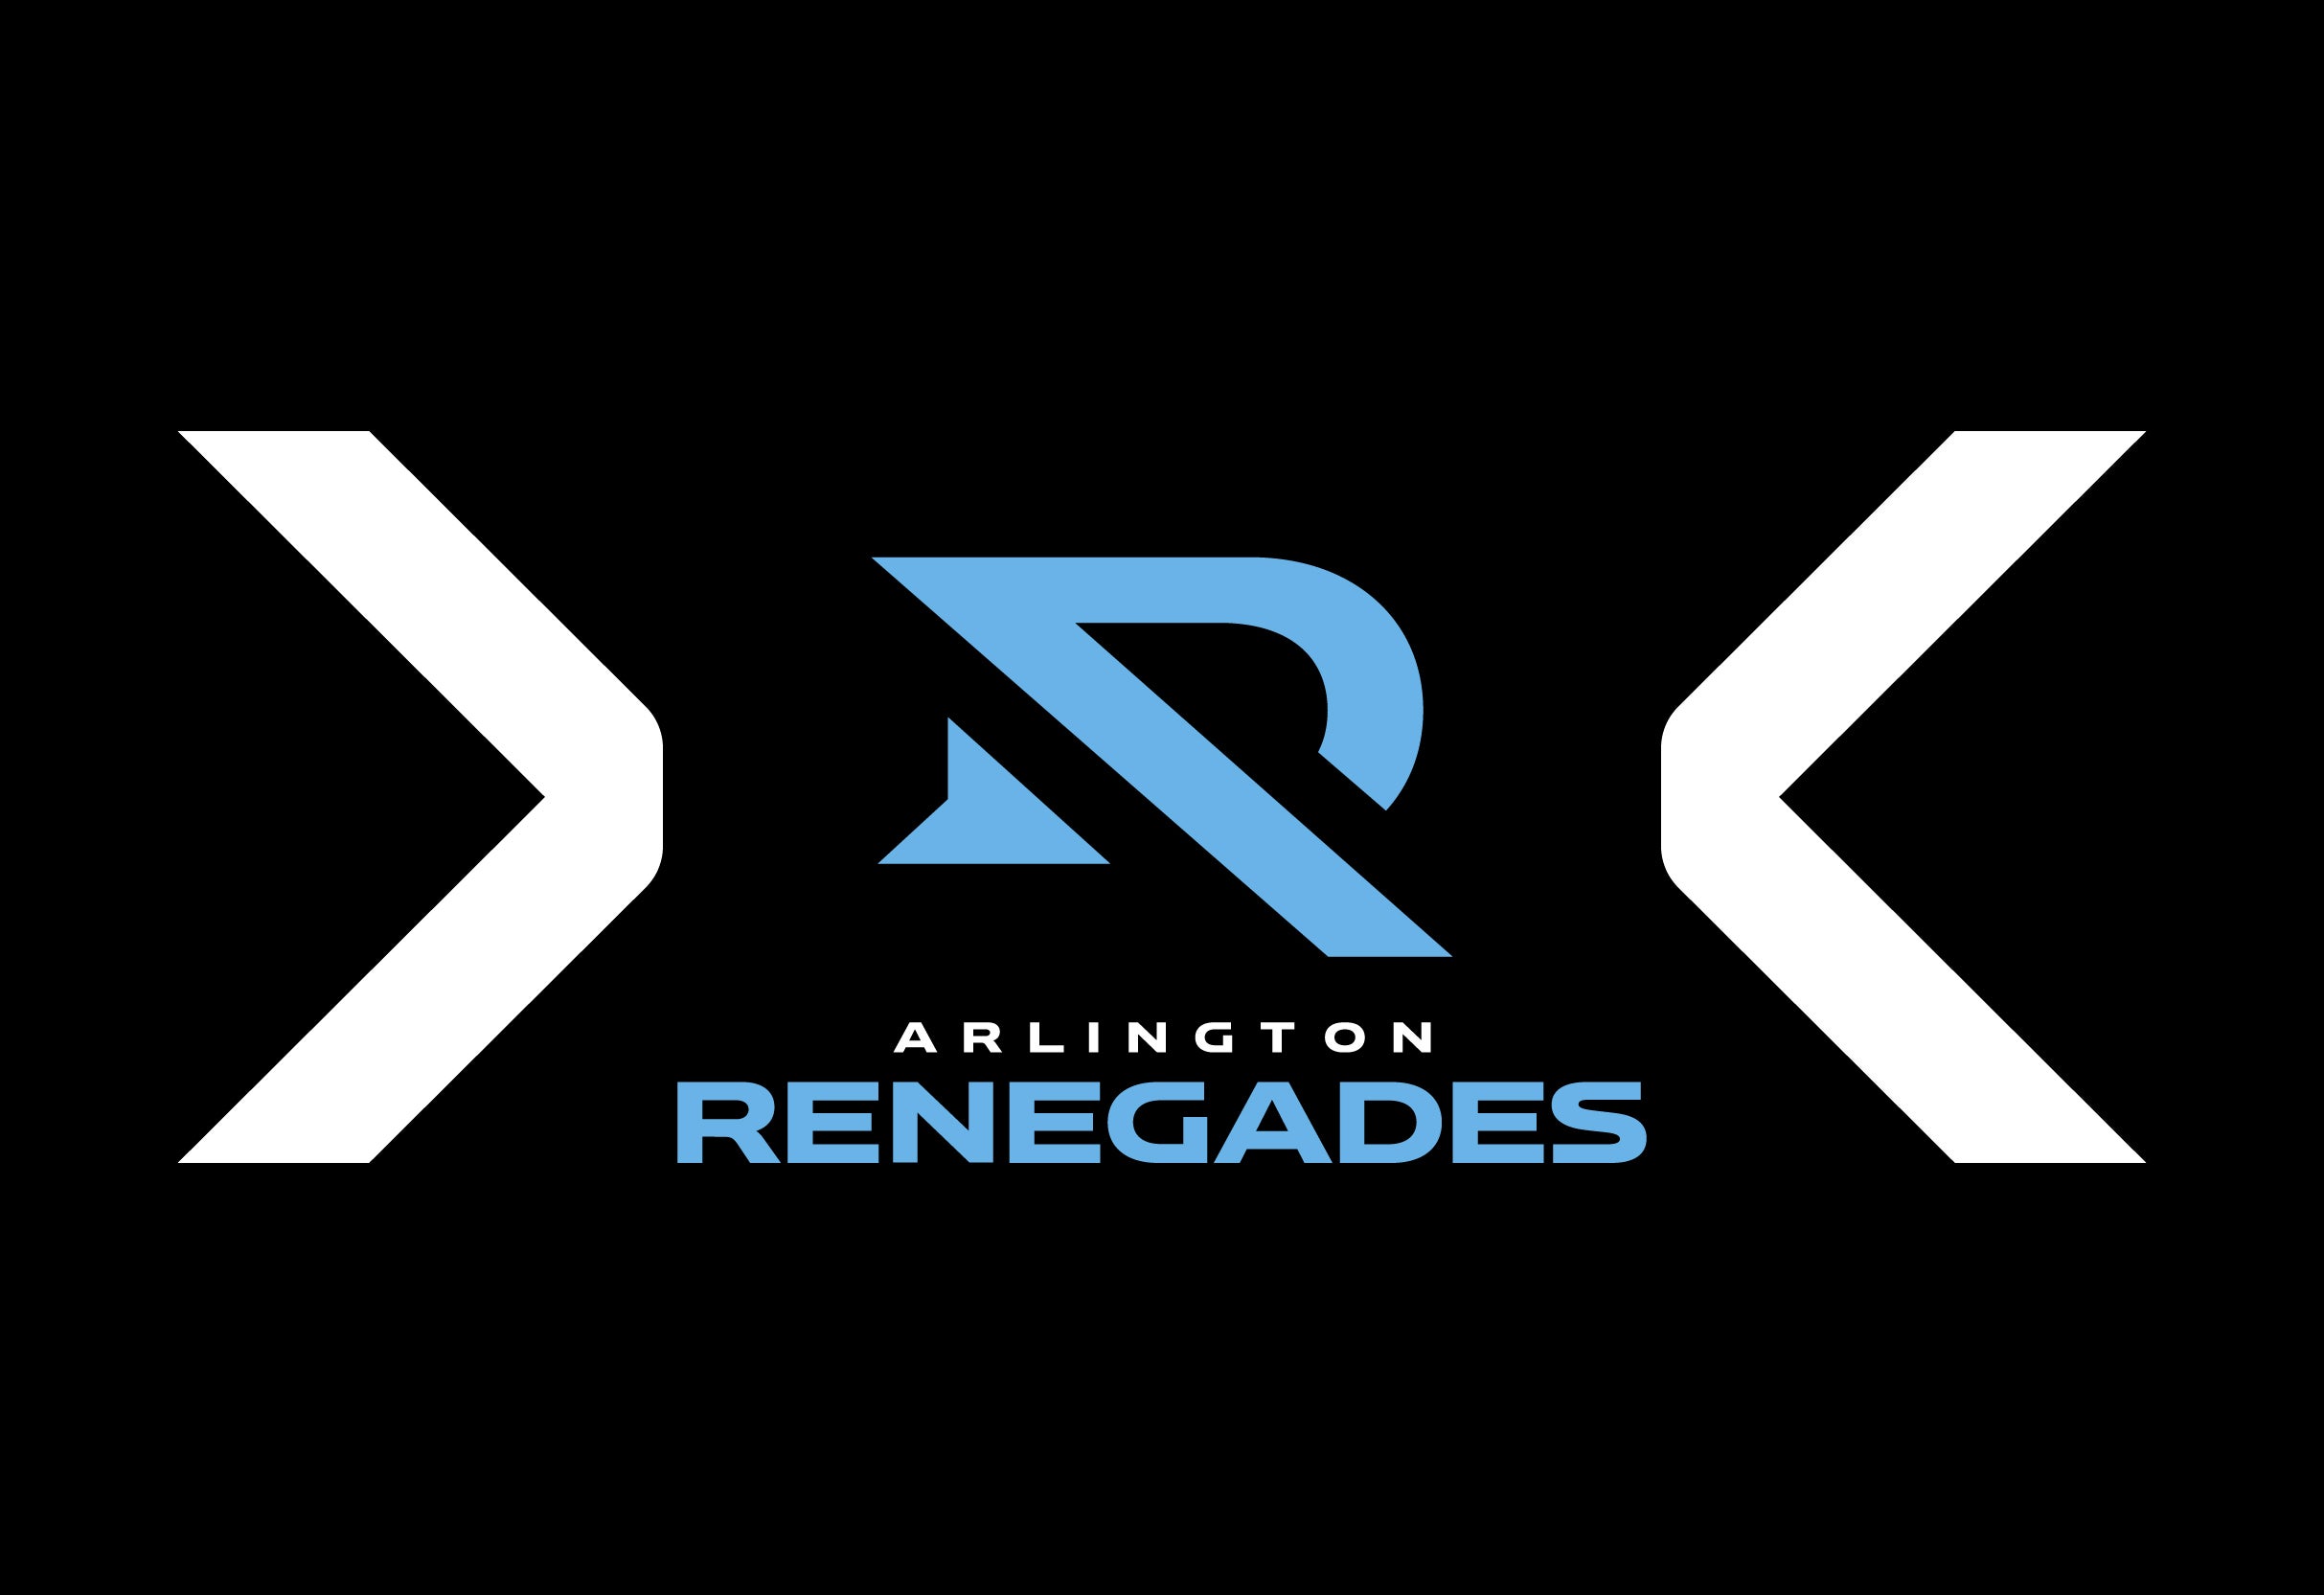 Arlington Renegades vs. Vegas Vipers in Arlington promo photo for Venue Presales presale offer code